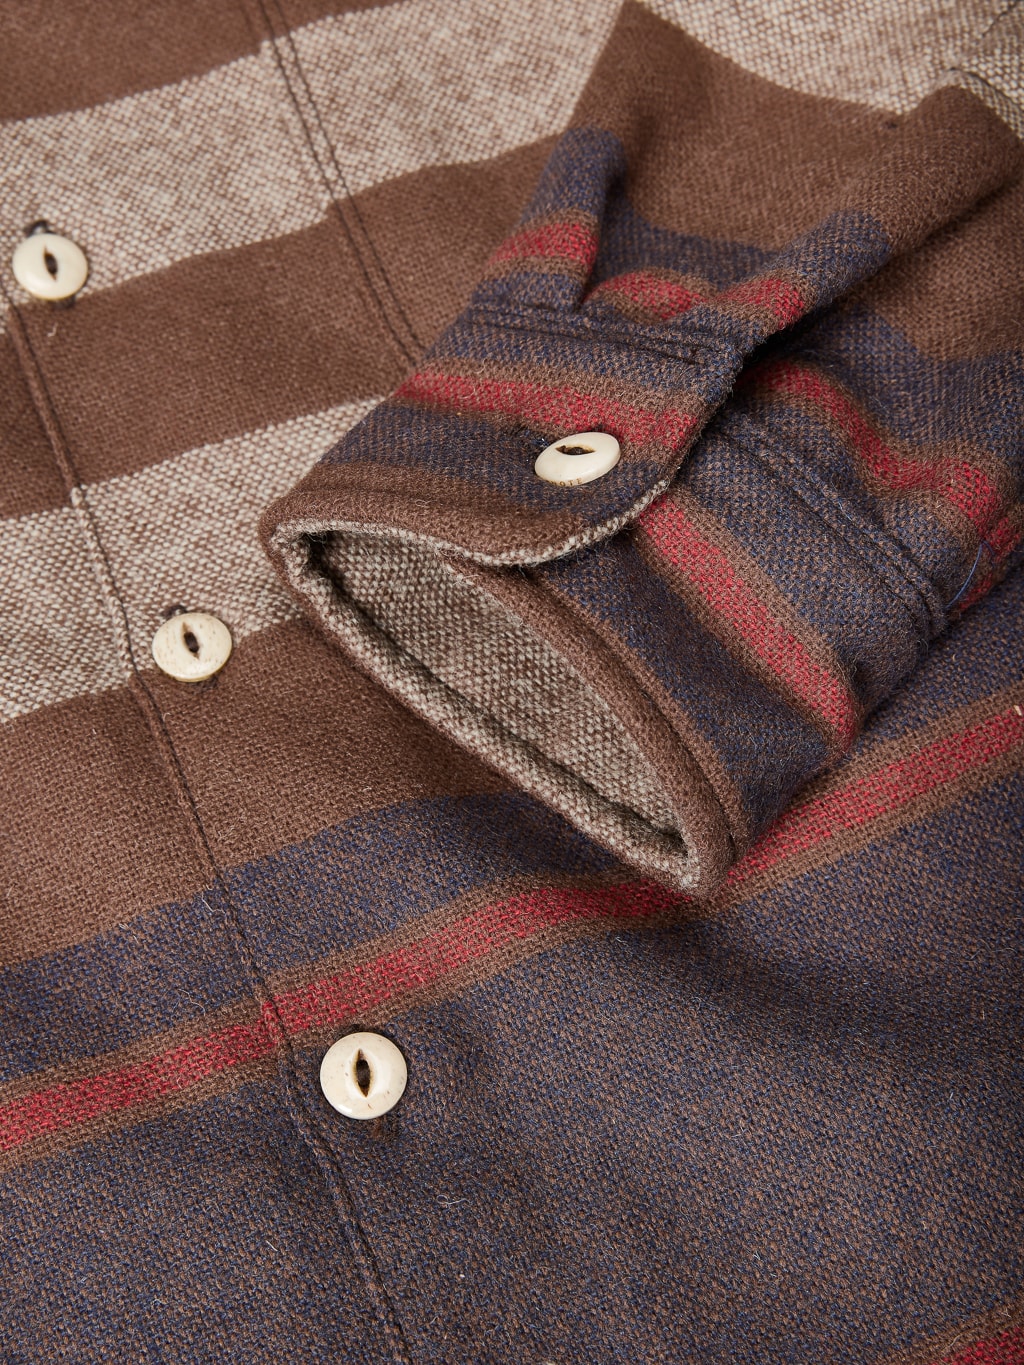 freenote cloth benson brown stripe classic wool overshirt cuff detail